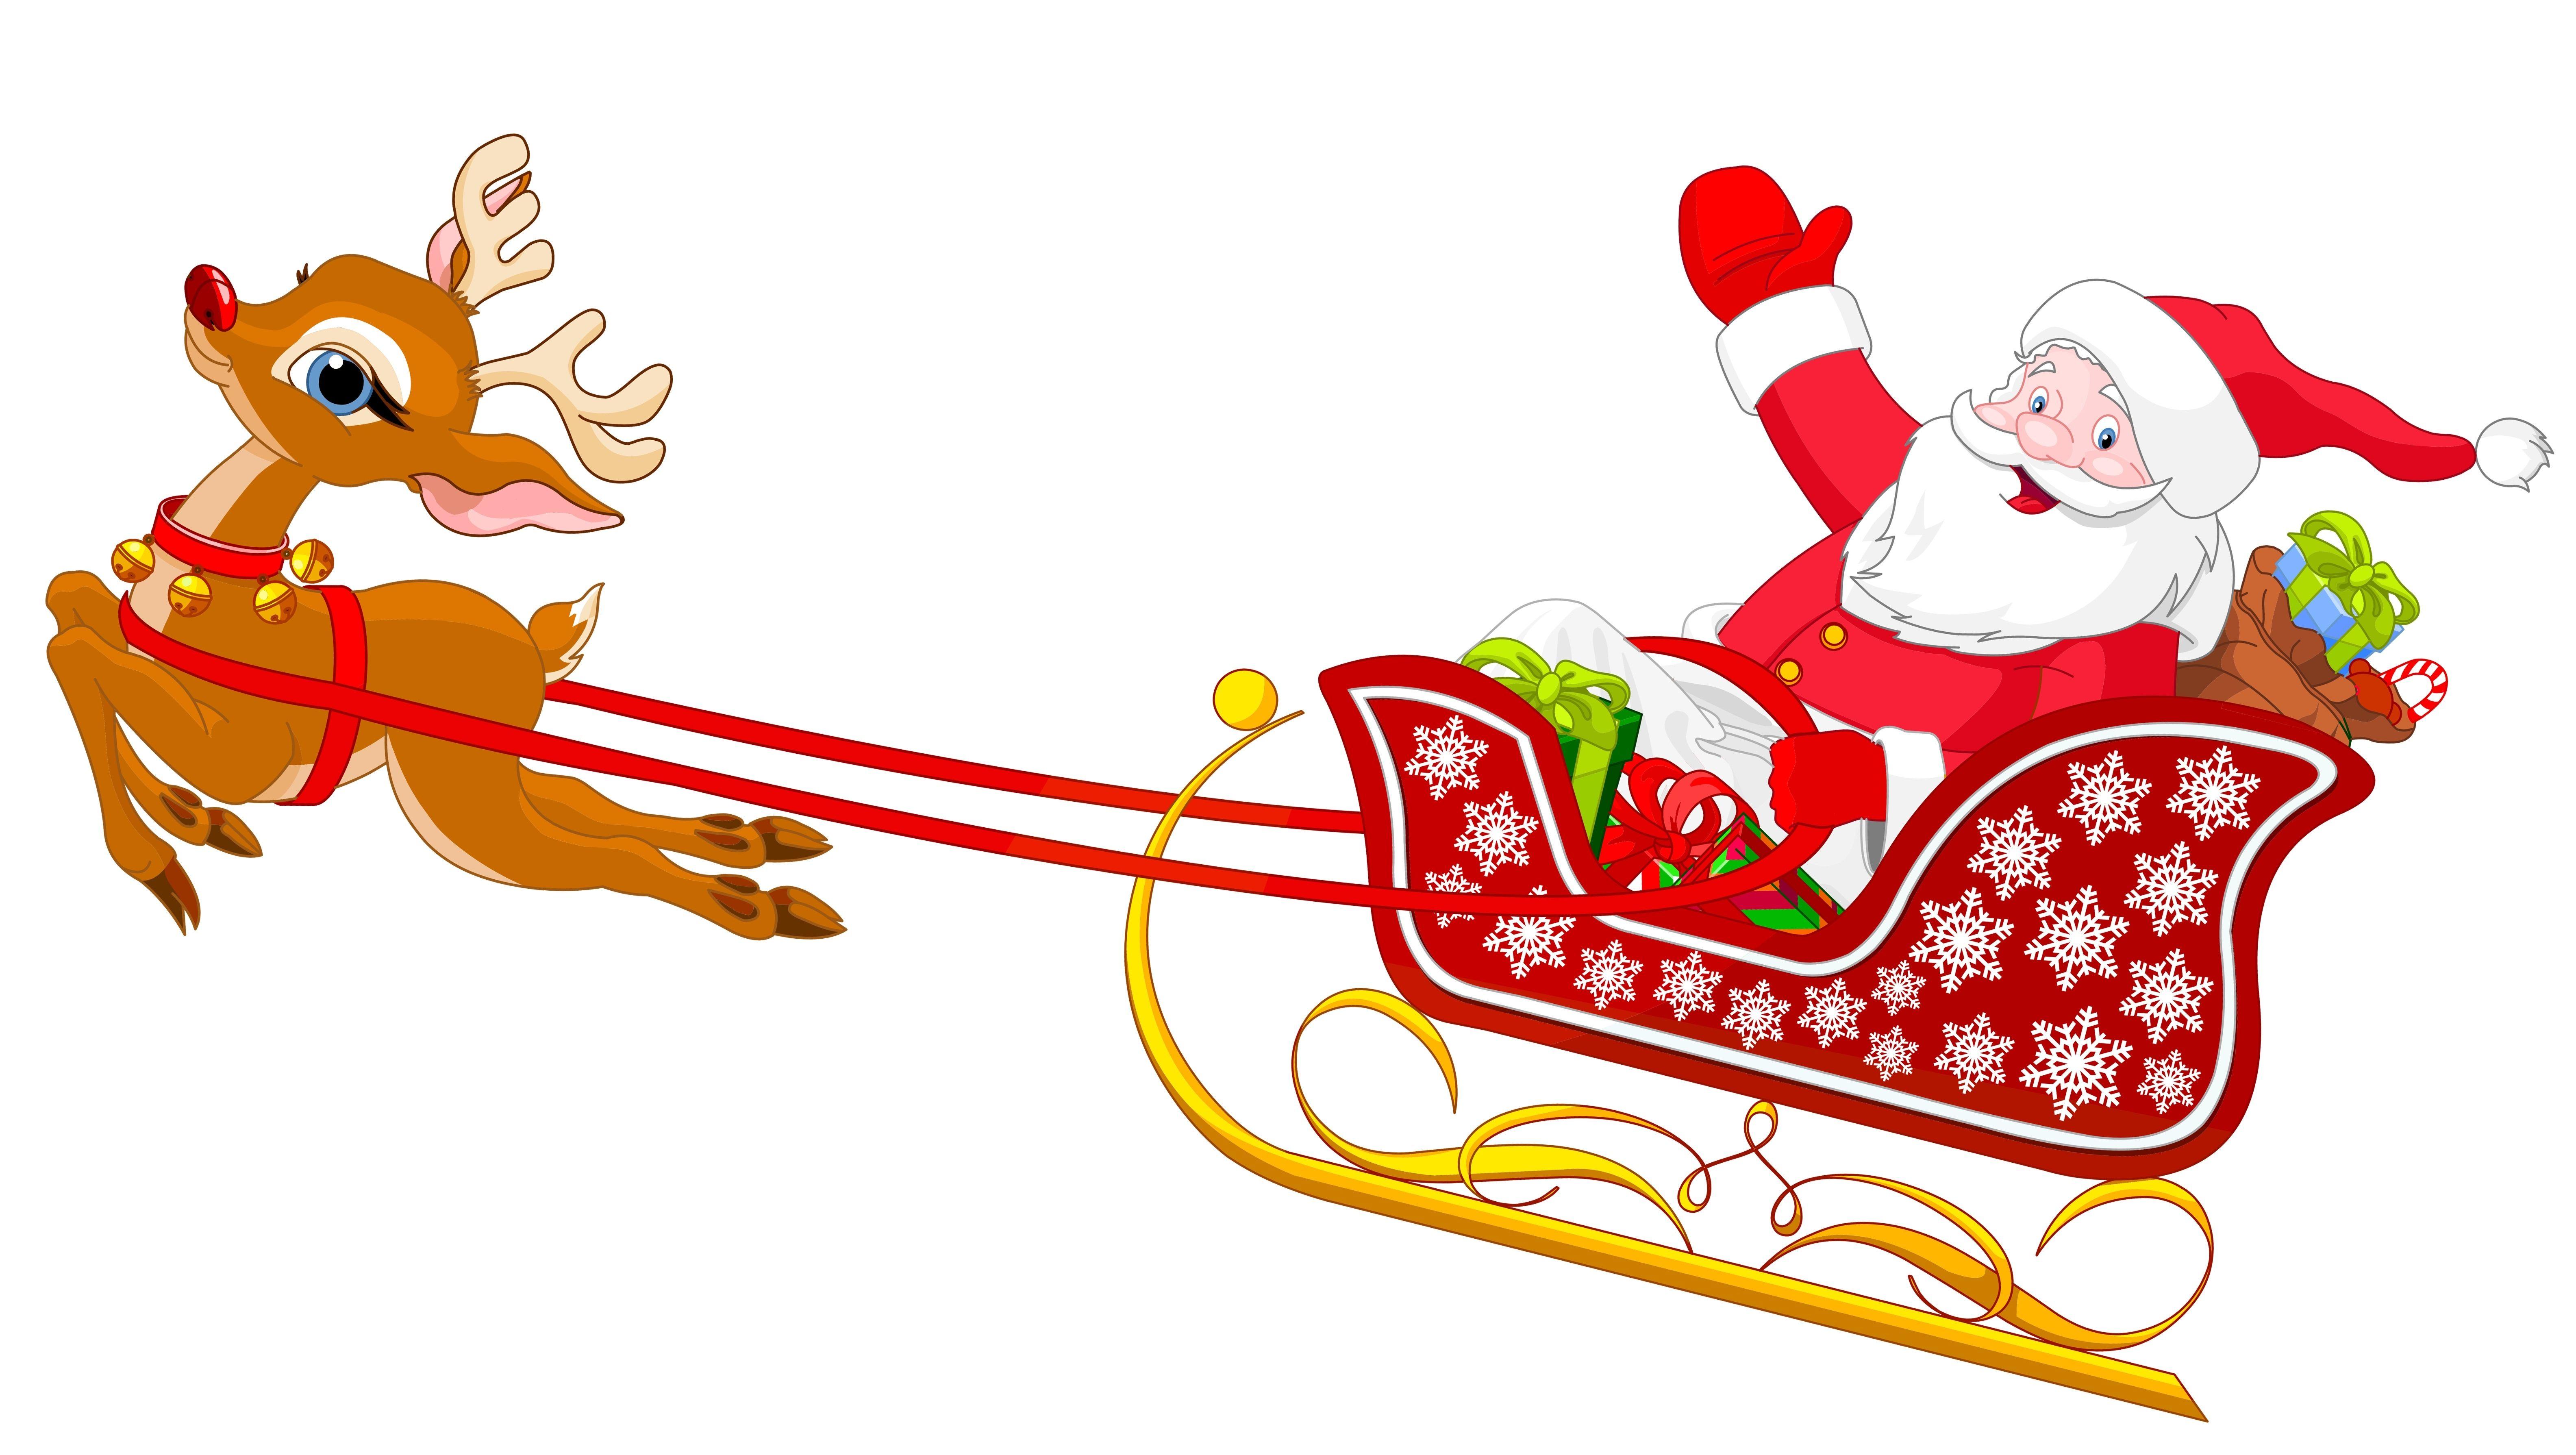 A little Christmas song. Santa, reindeer, Santa sleigh